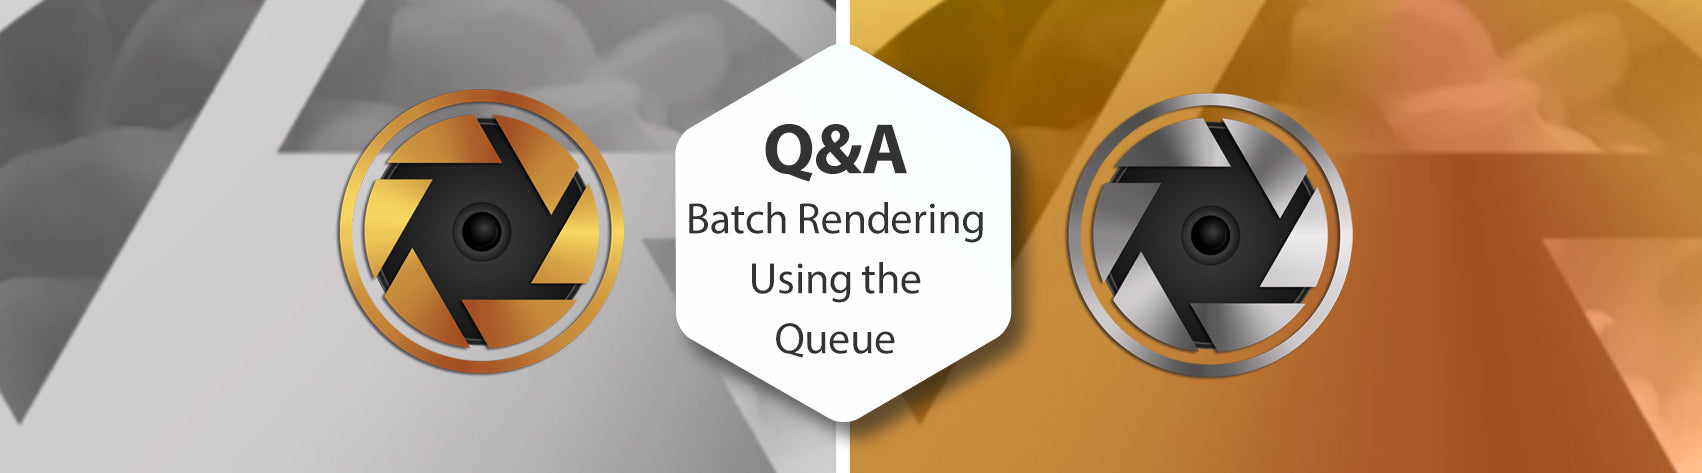 Q&A Batch Rendering Using the Queue